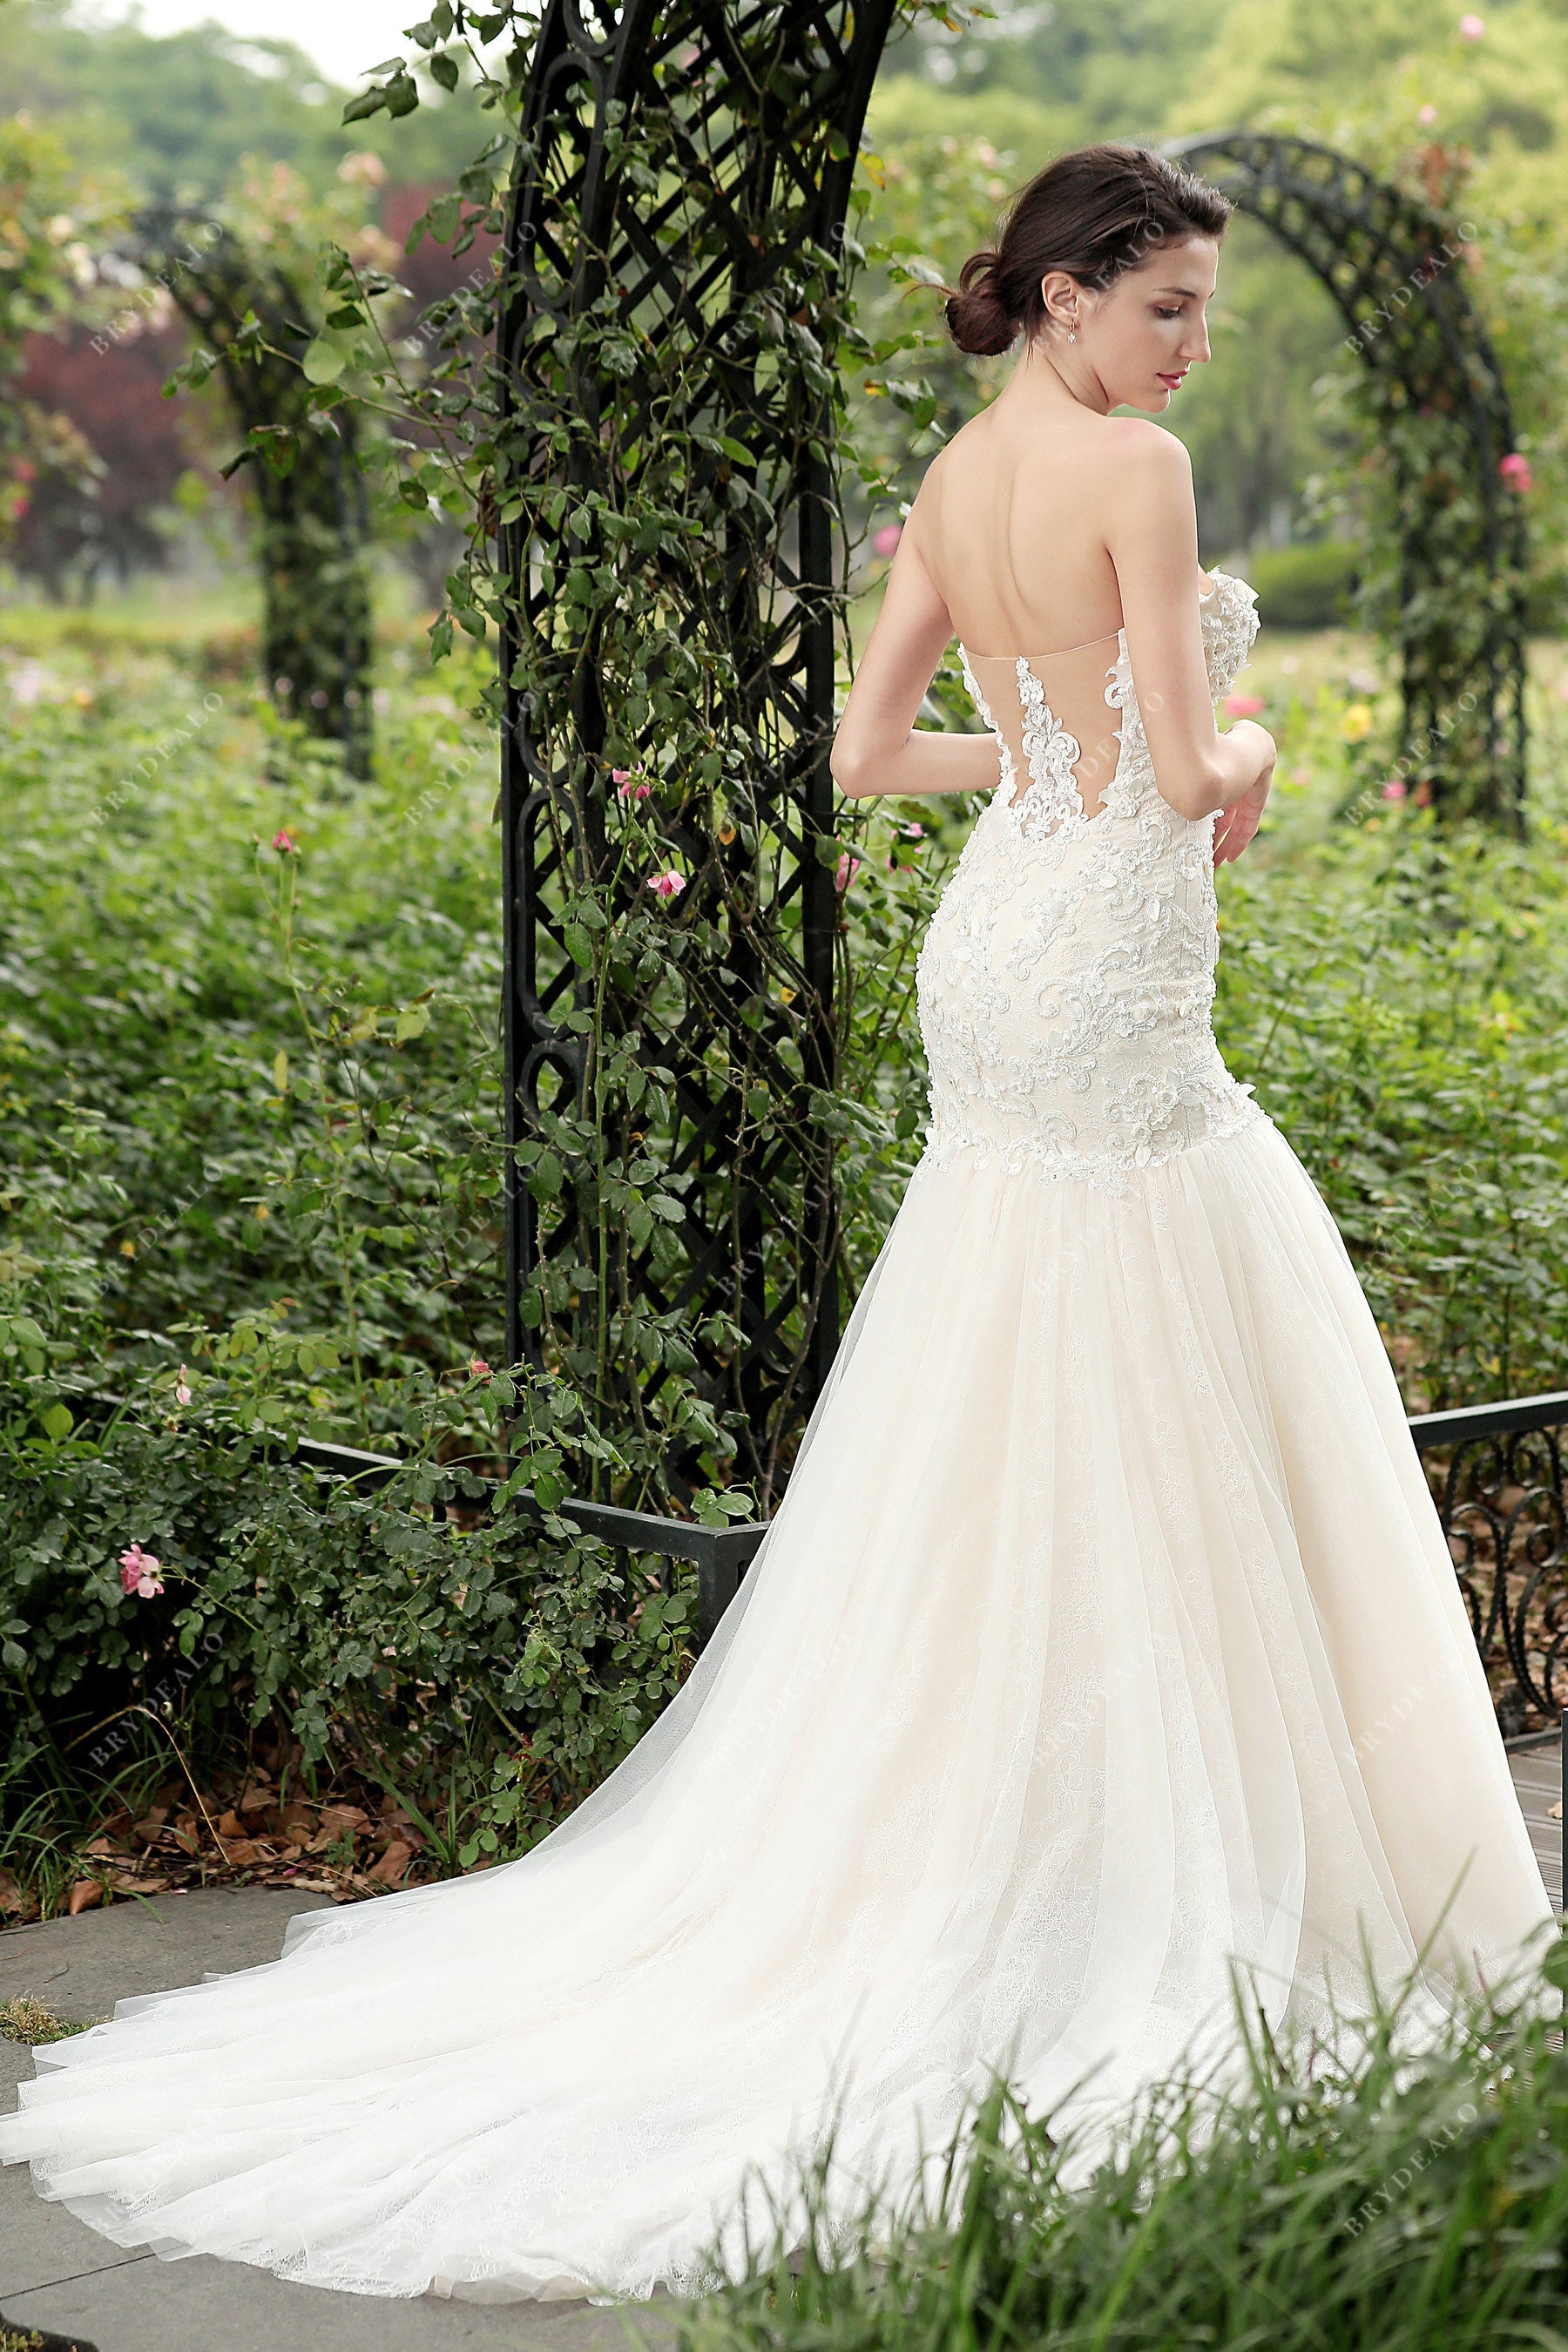 Sample Sale | Luxurious Strapless Beaded Flower Wedding Dress